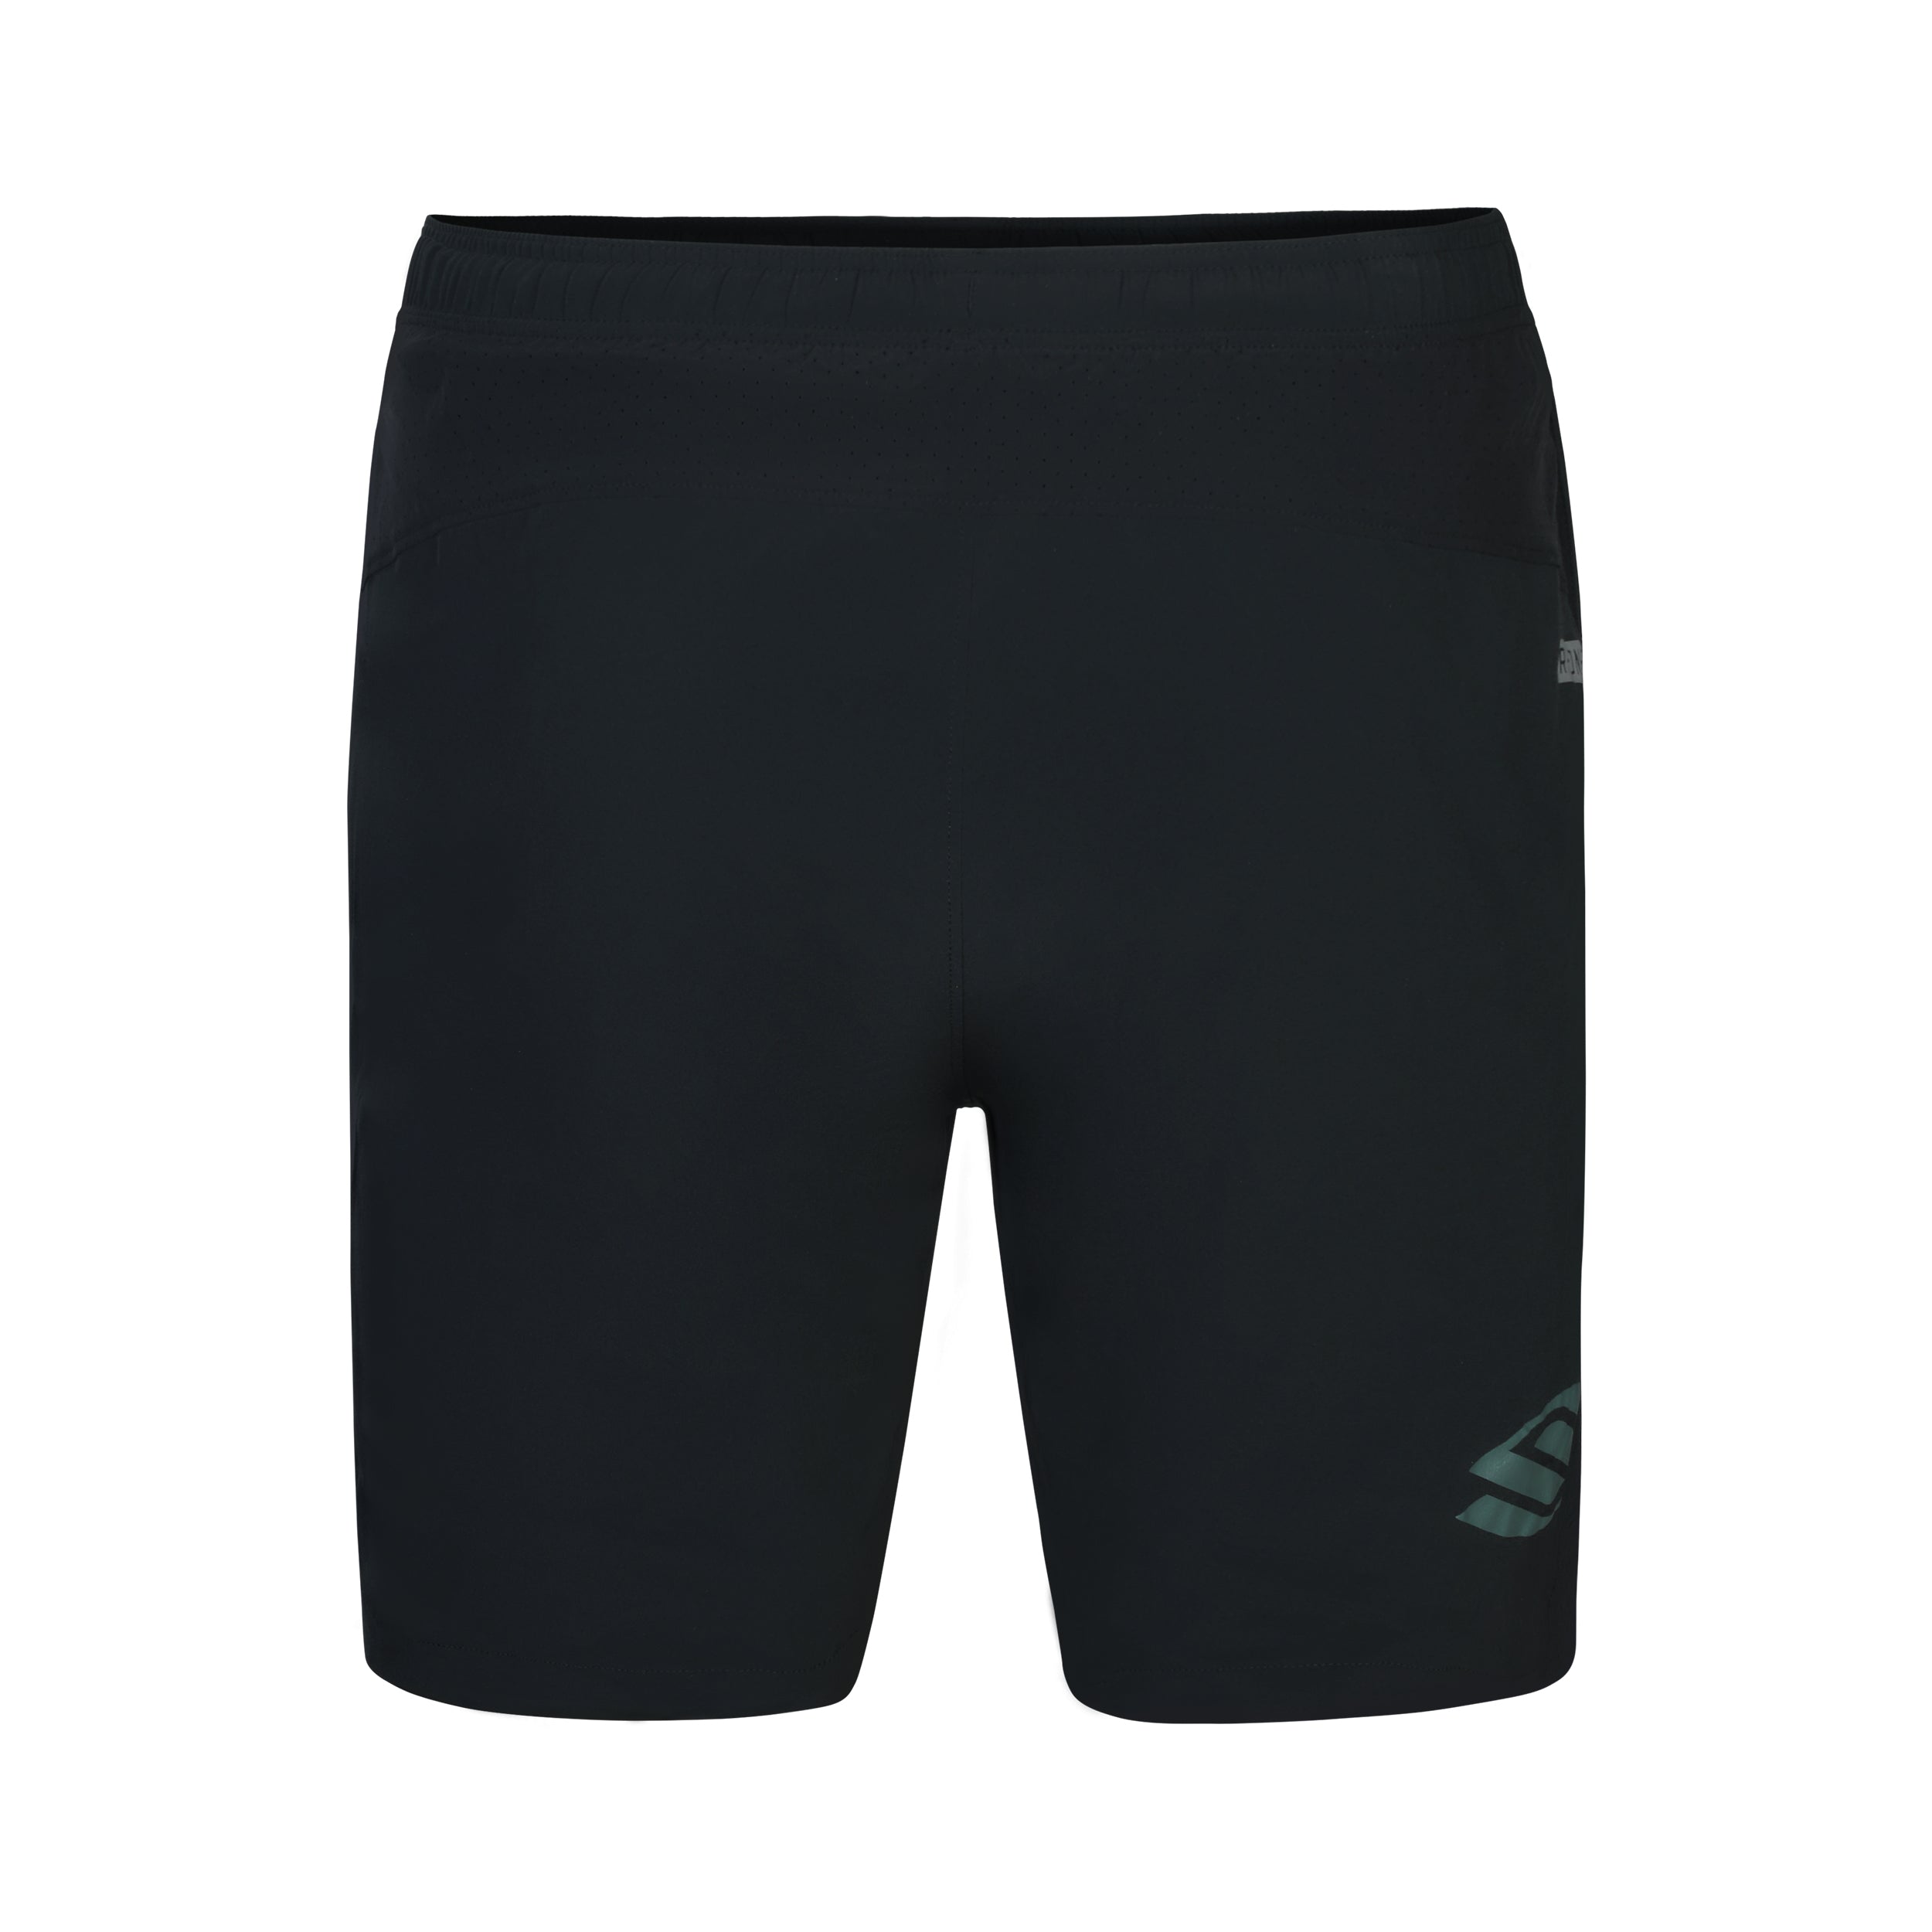 Selkirk x Rhone Men’s 7” Backspin Shorts